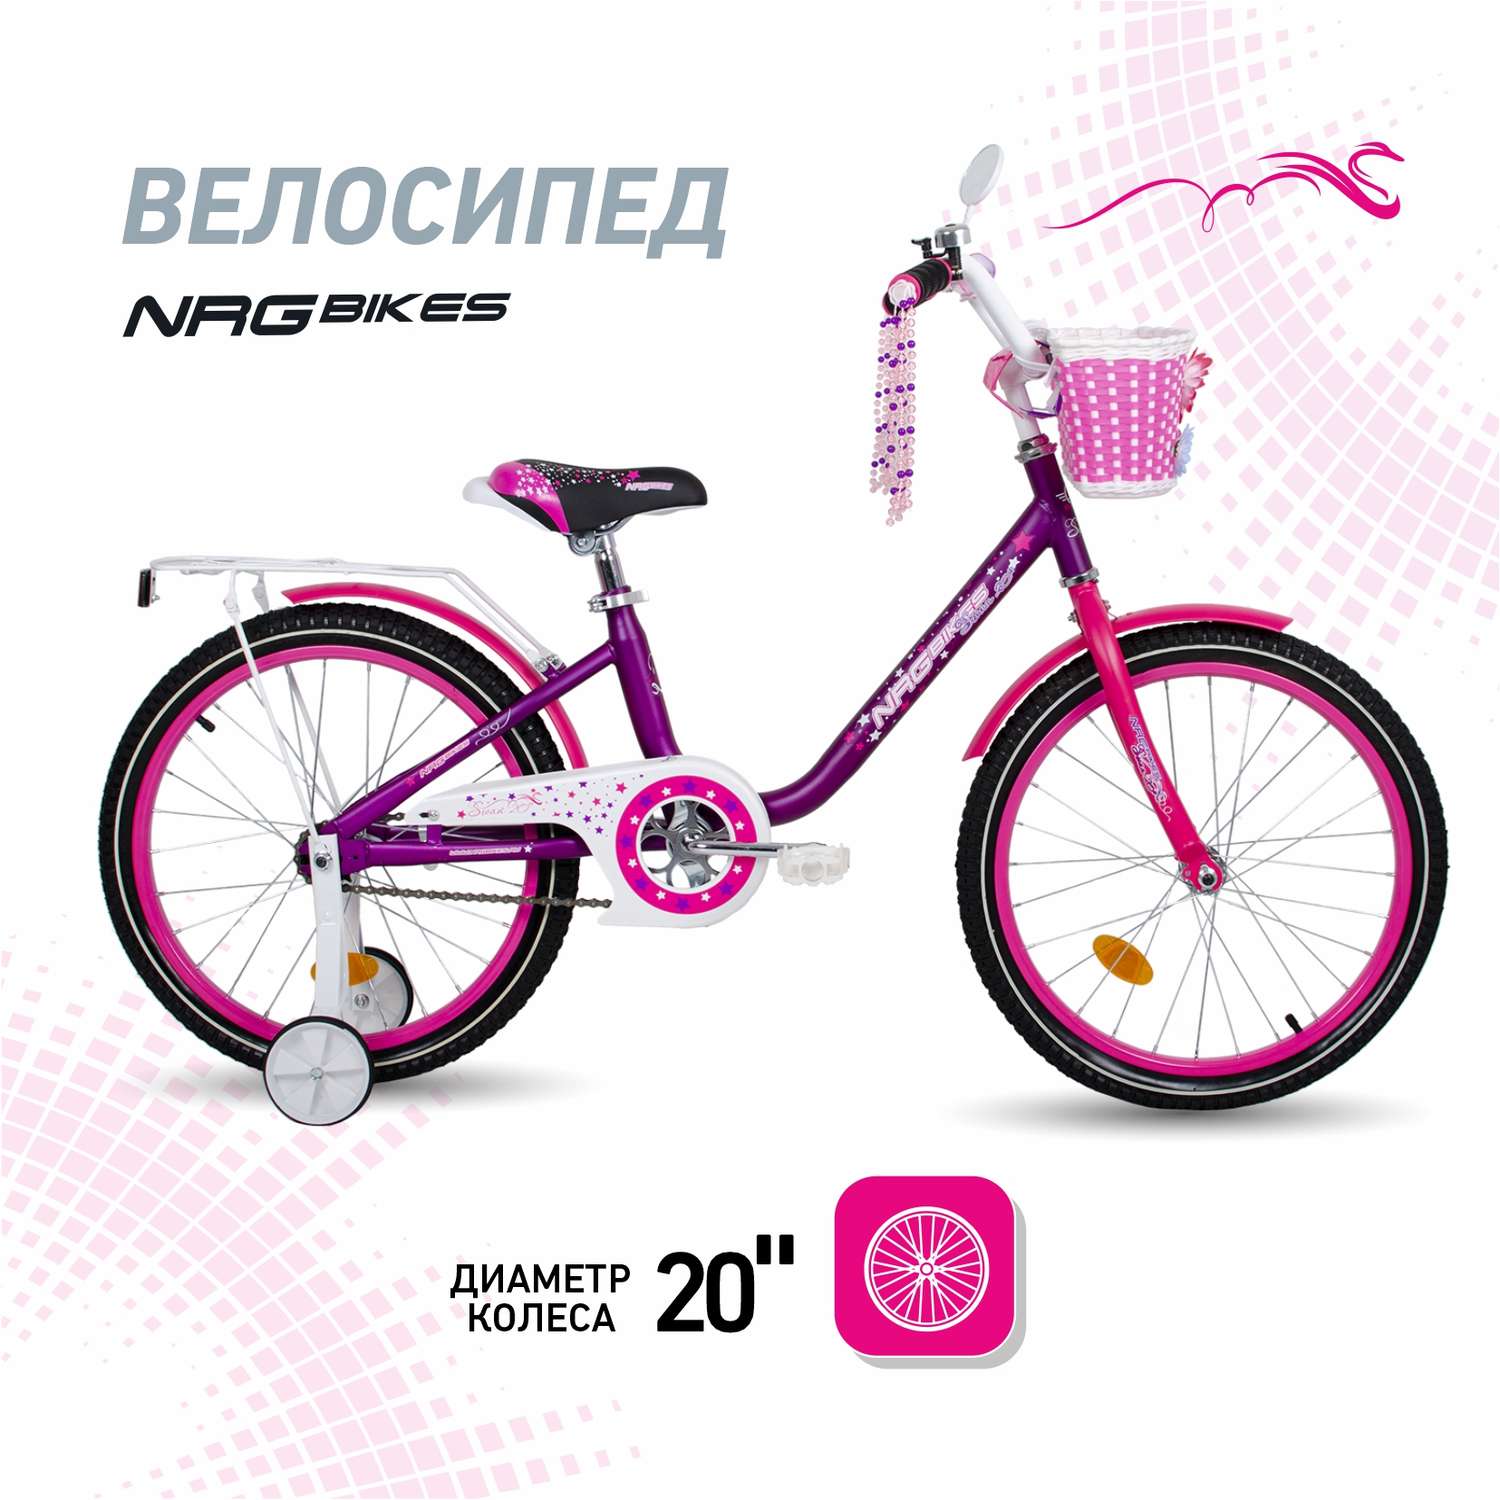 Велосипед NRG BIKES SWAN 20 violet-pink - фото 1